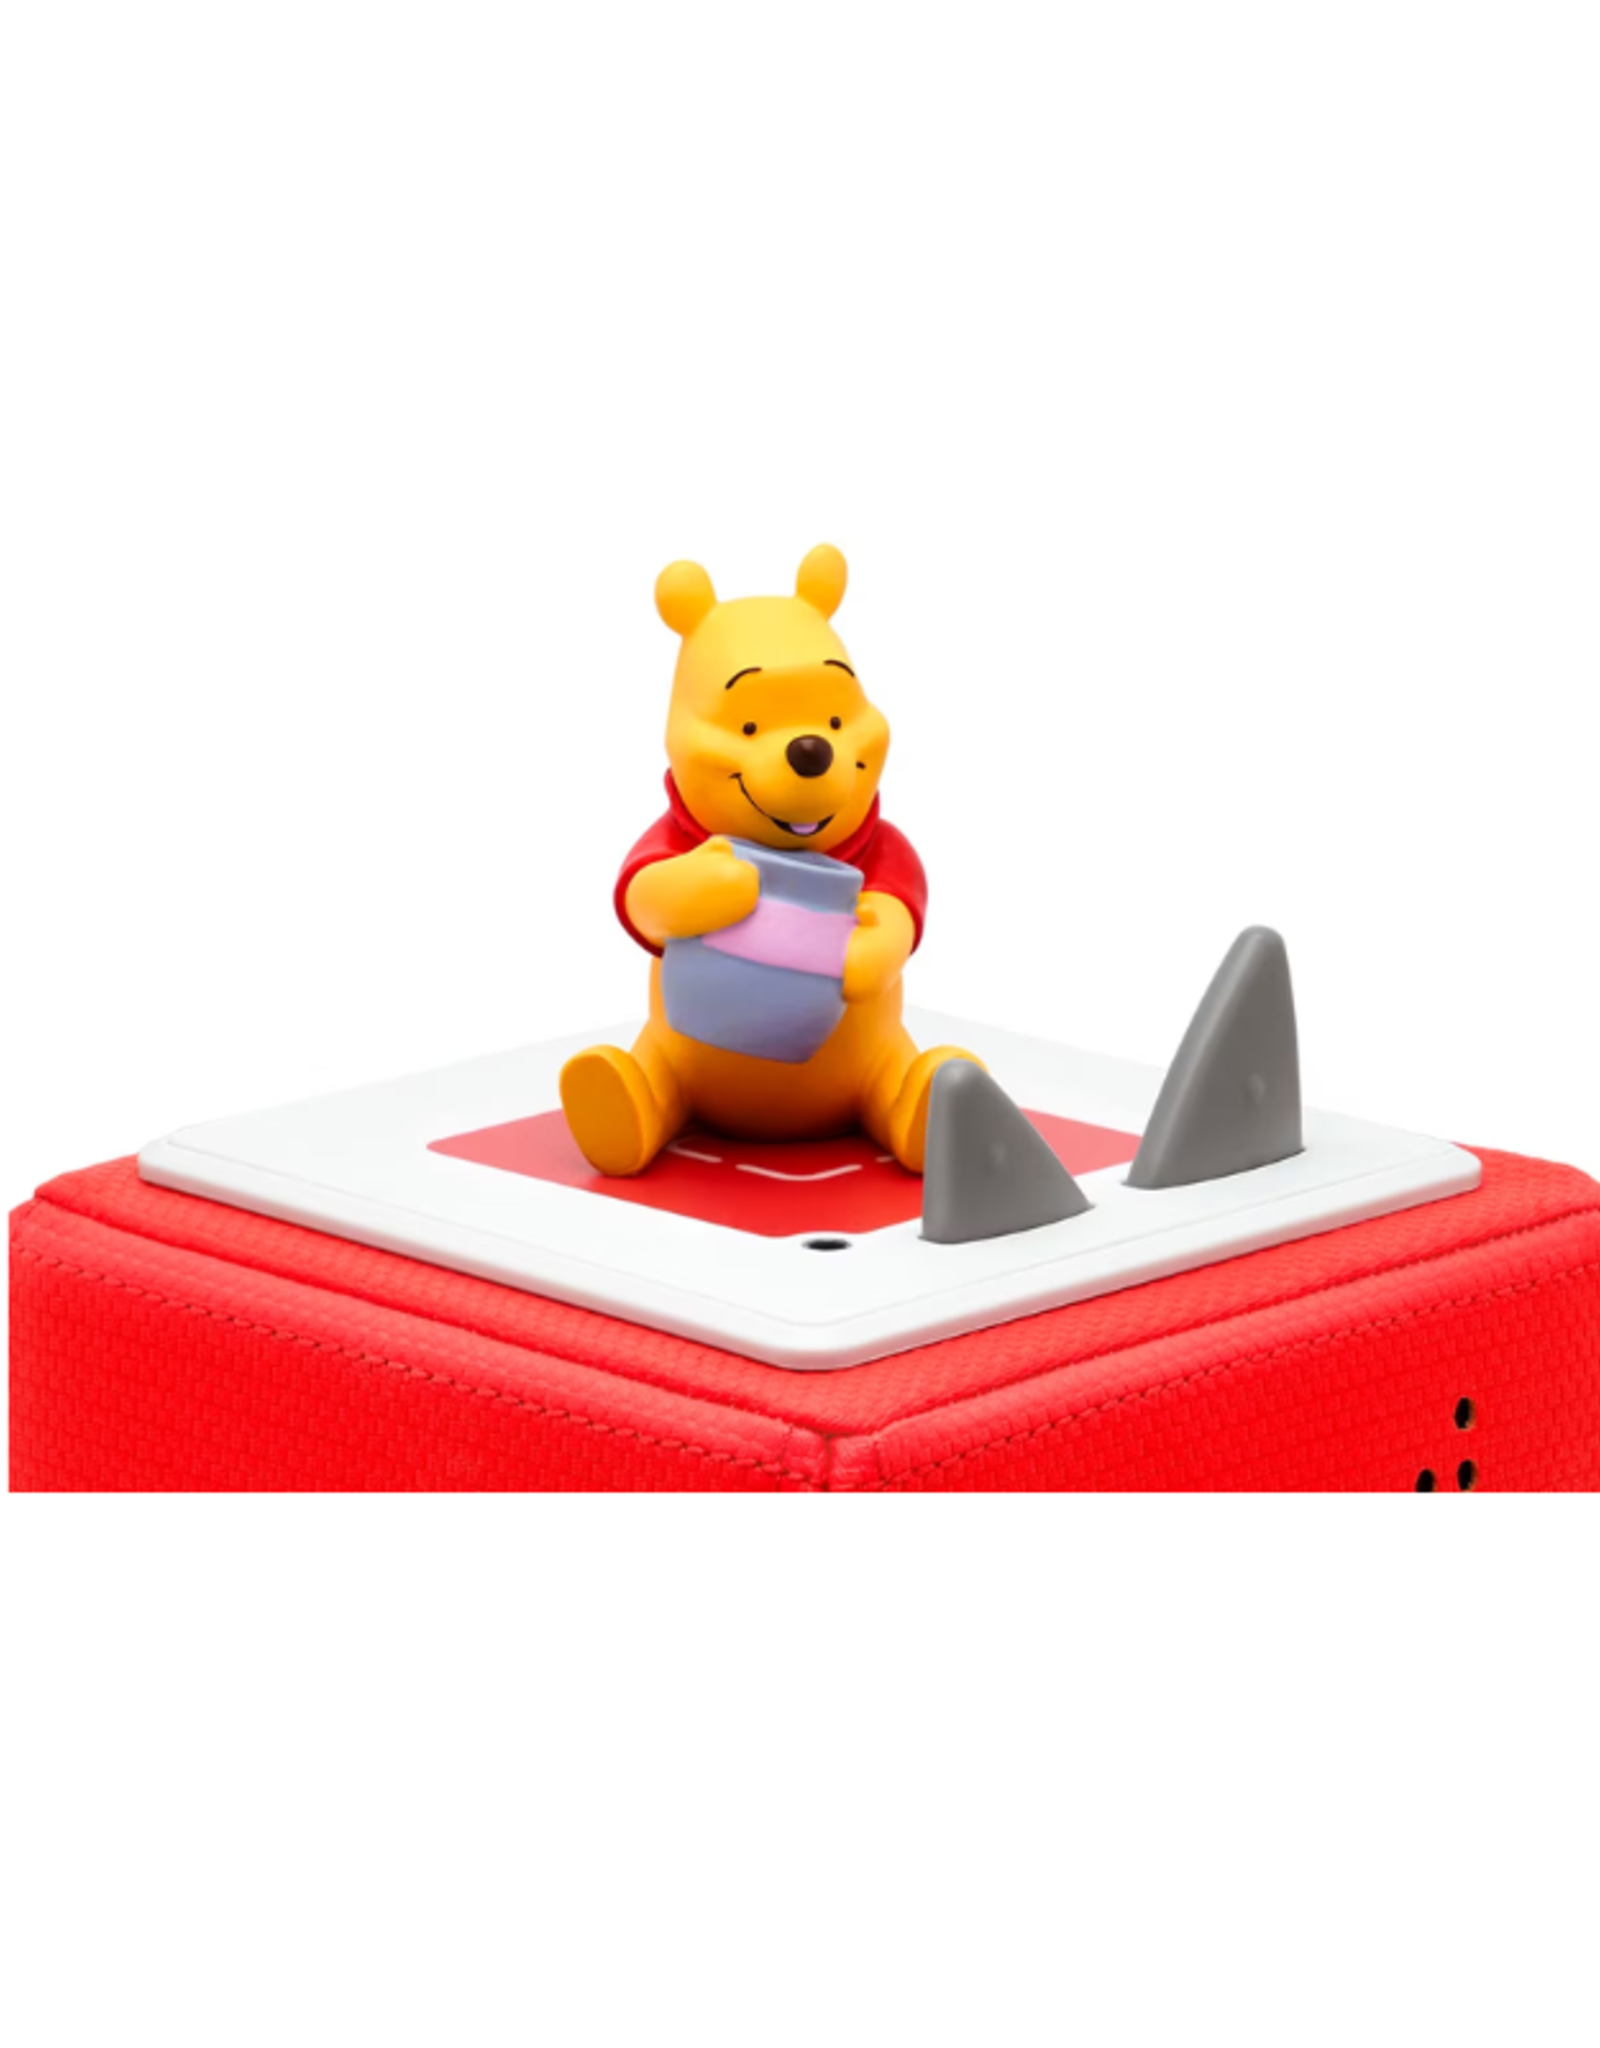 Disney - Winnie the Pooh - Family Fun Hobbies